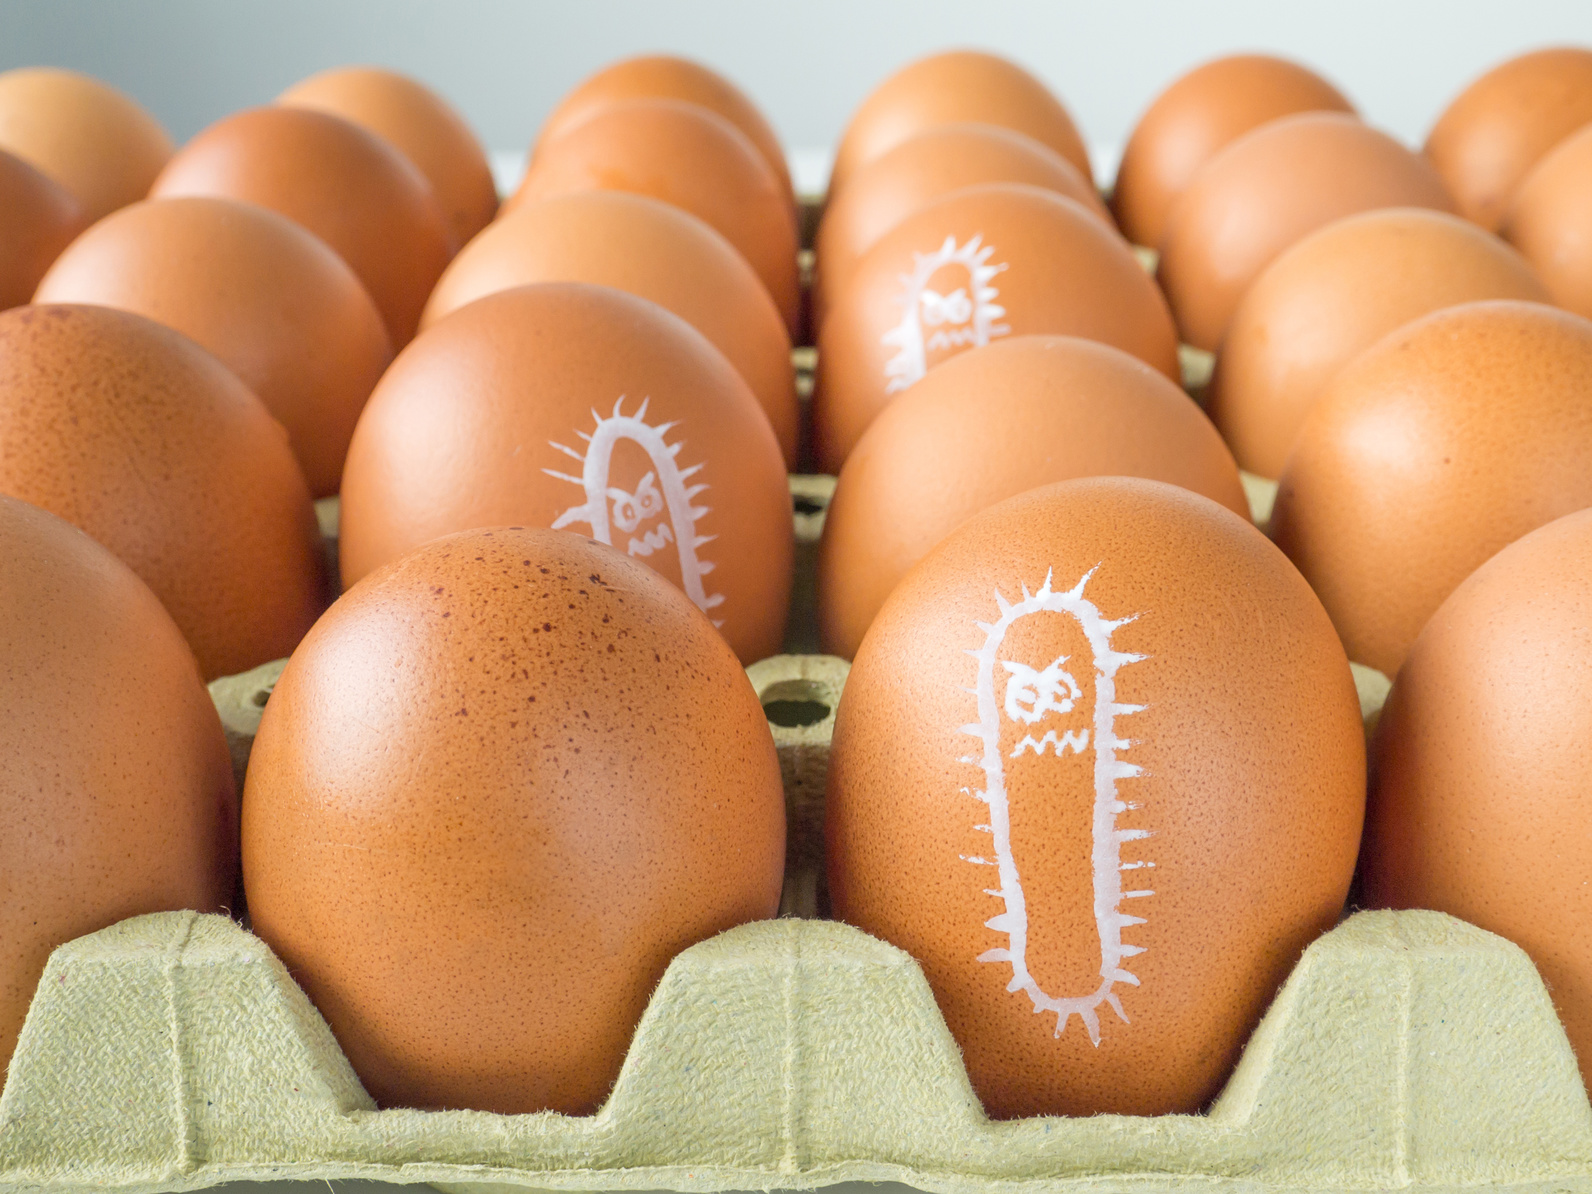 Salmonella bacterium drawn on eggs